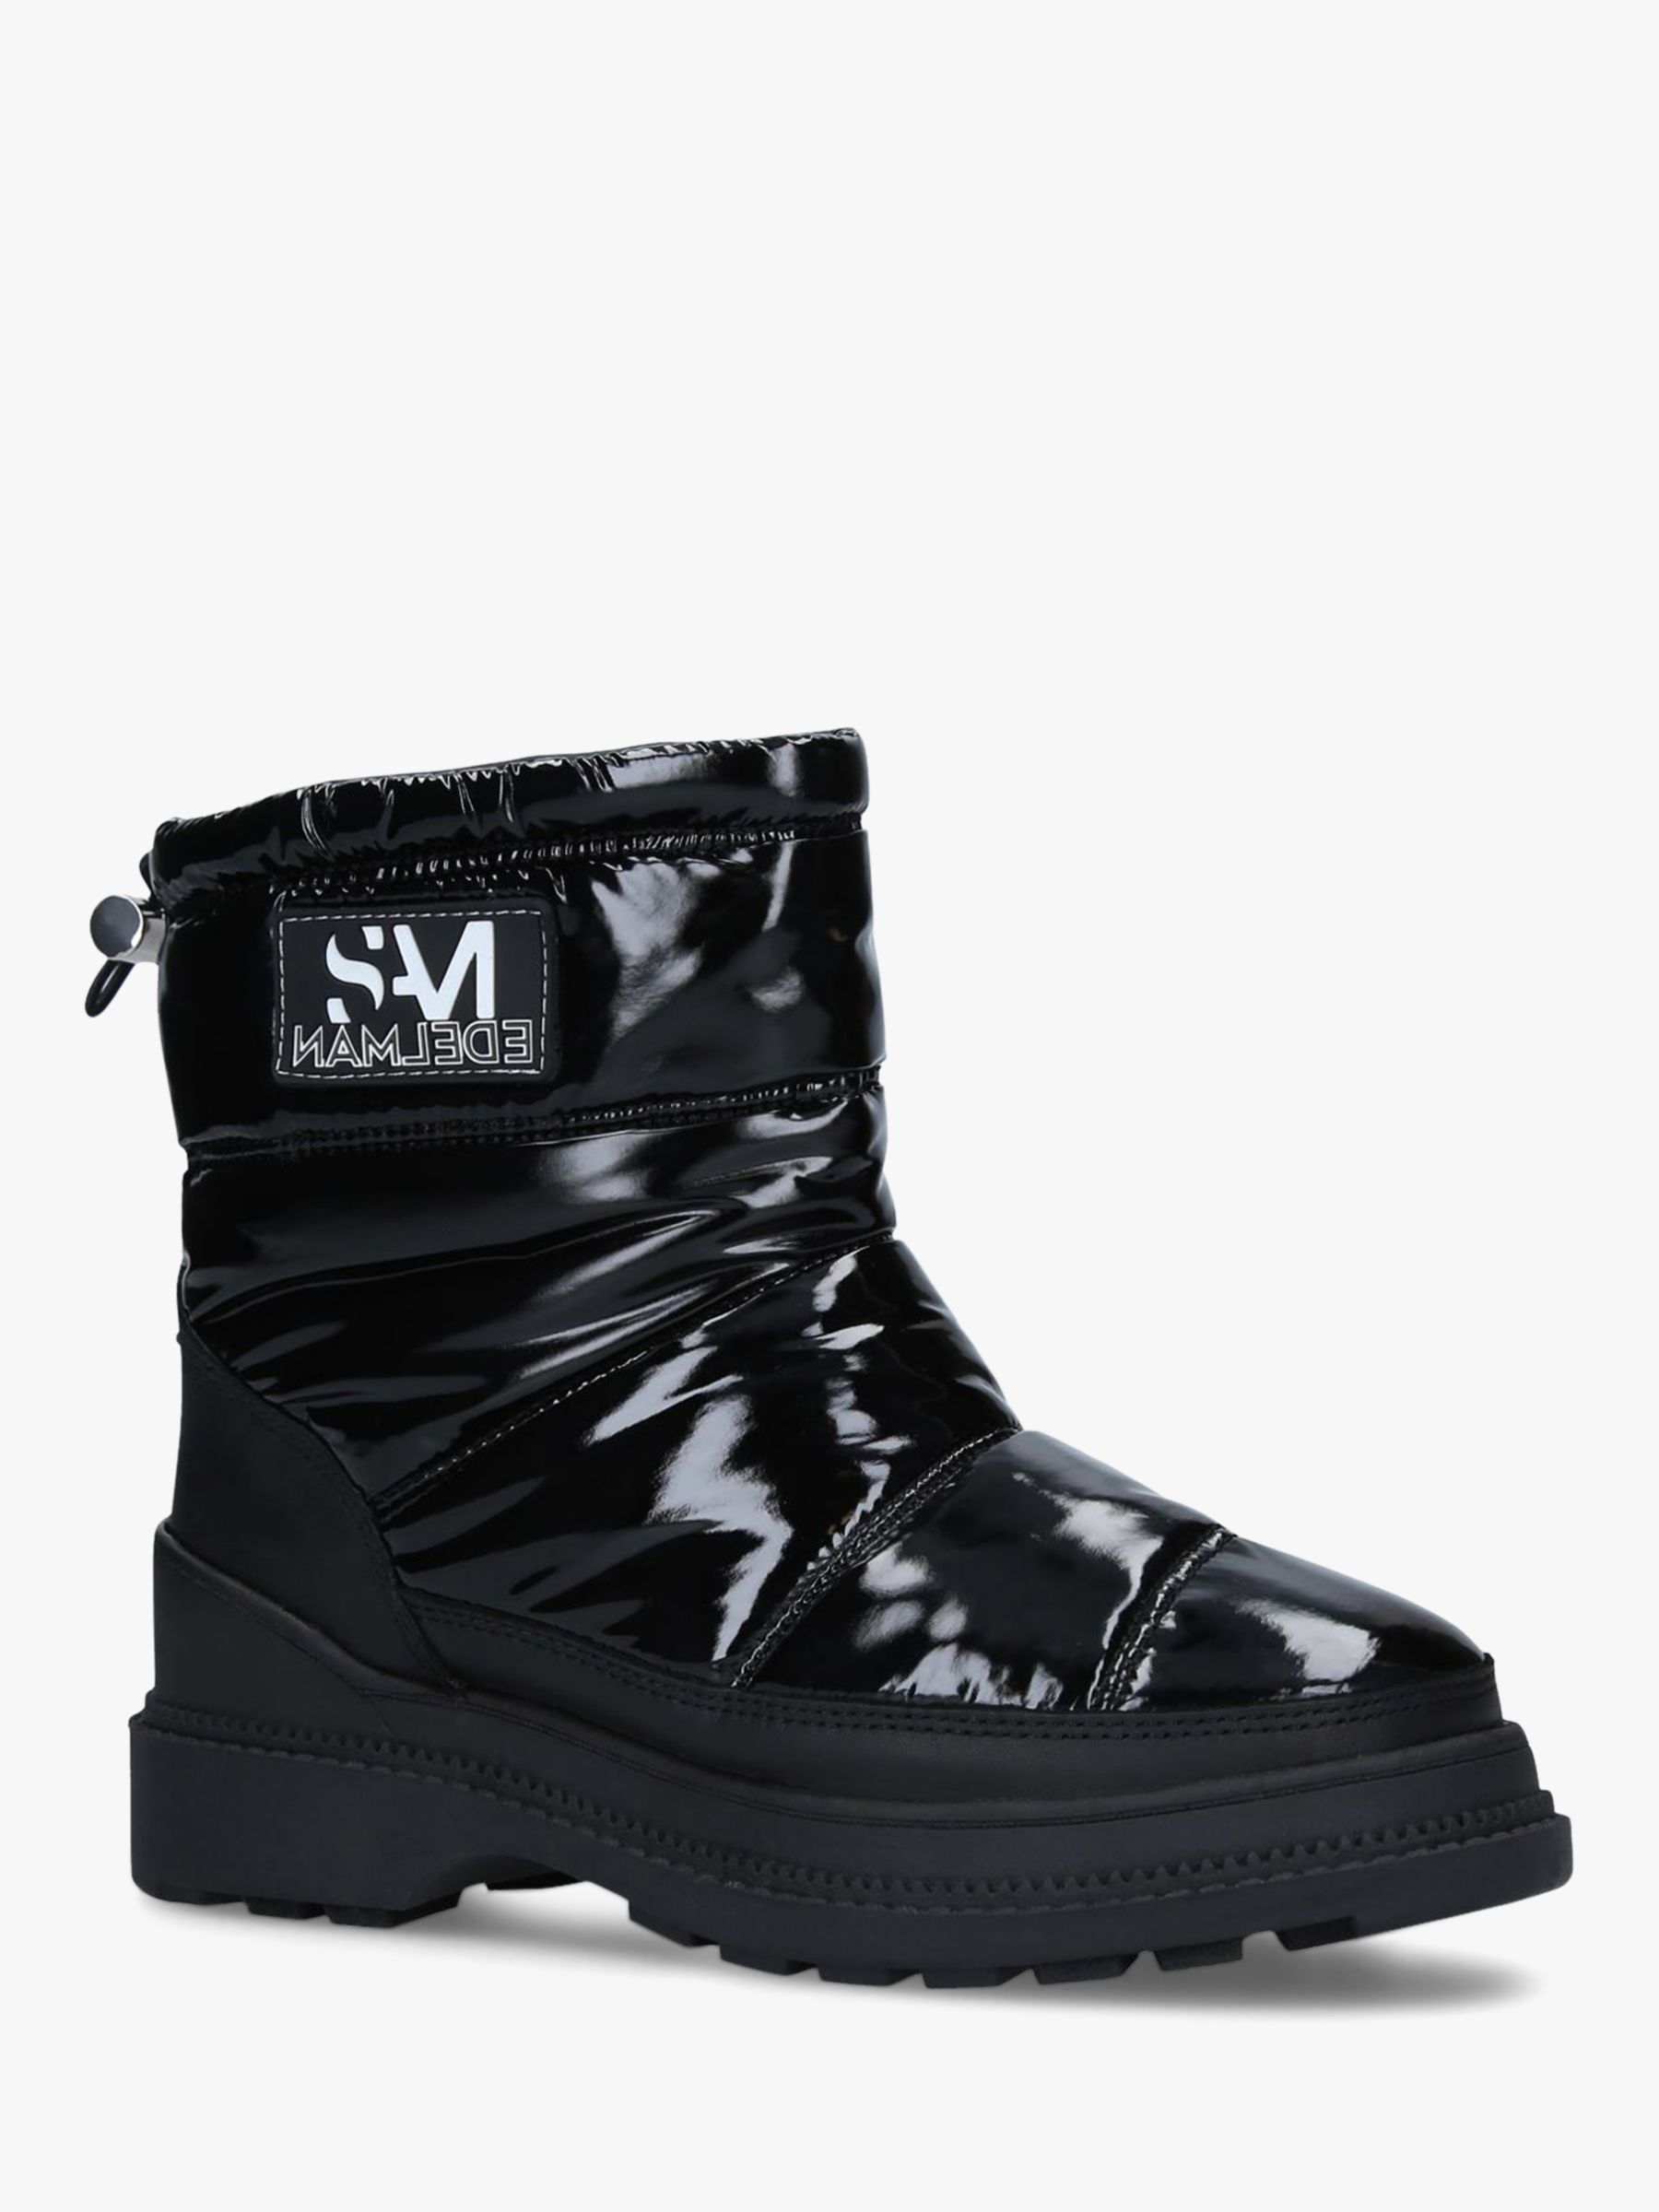 buy snow boots online